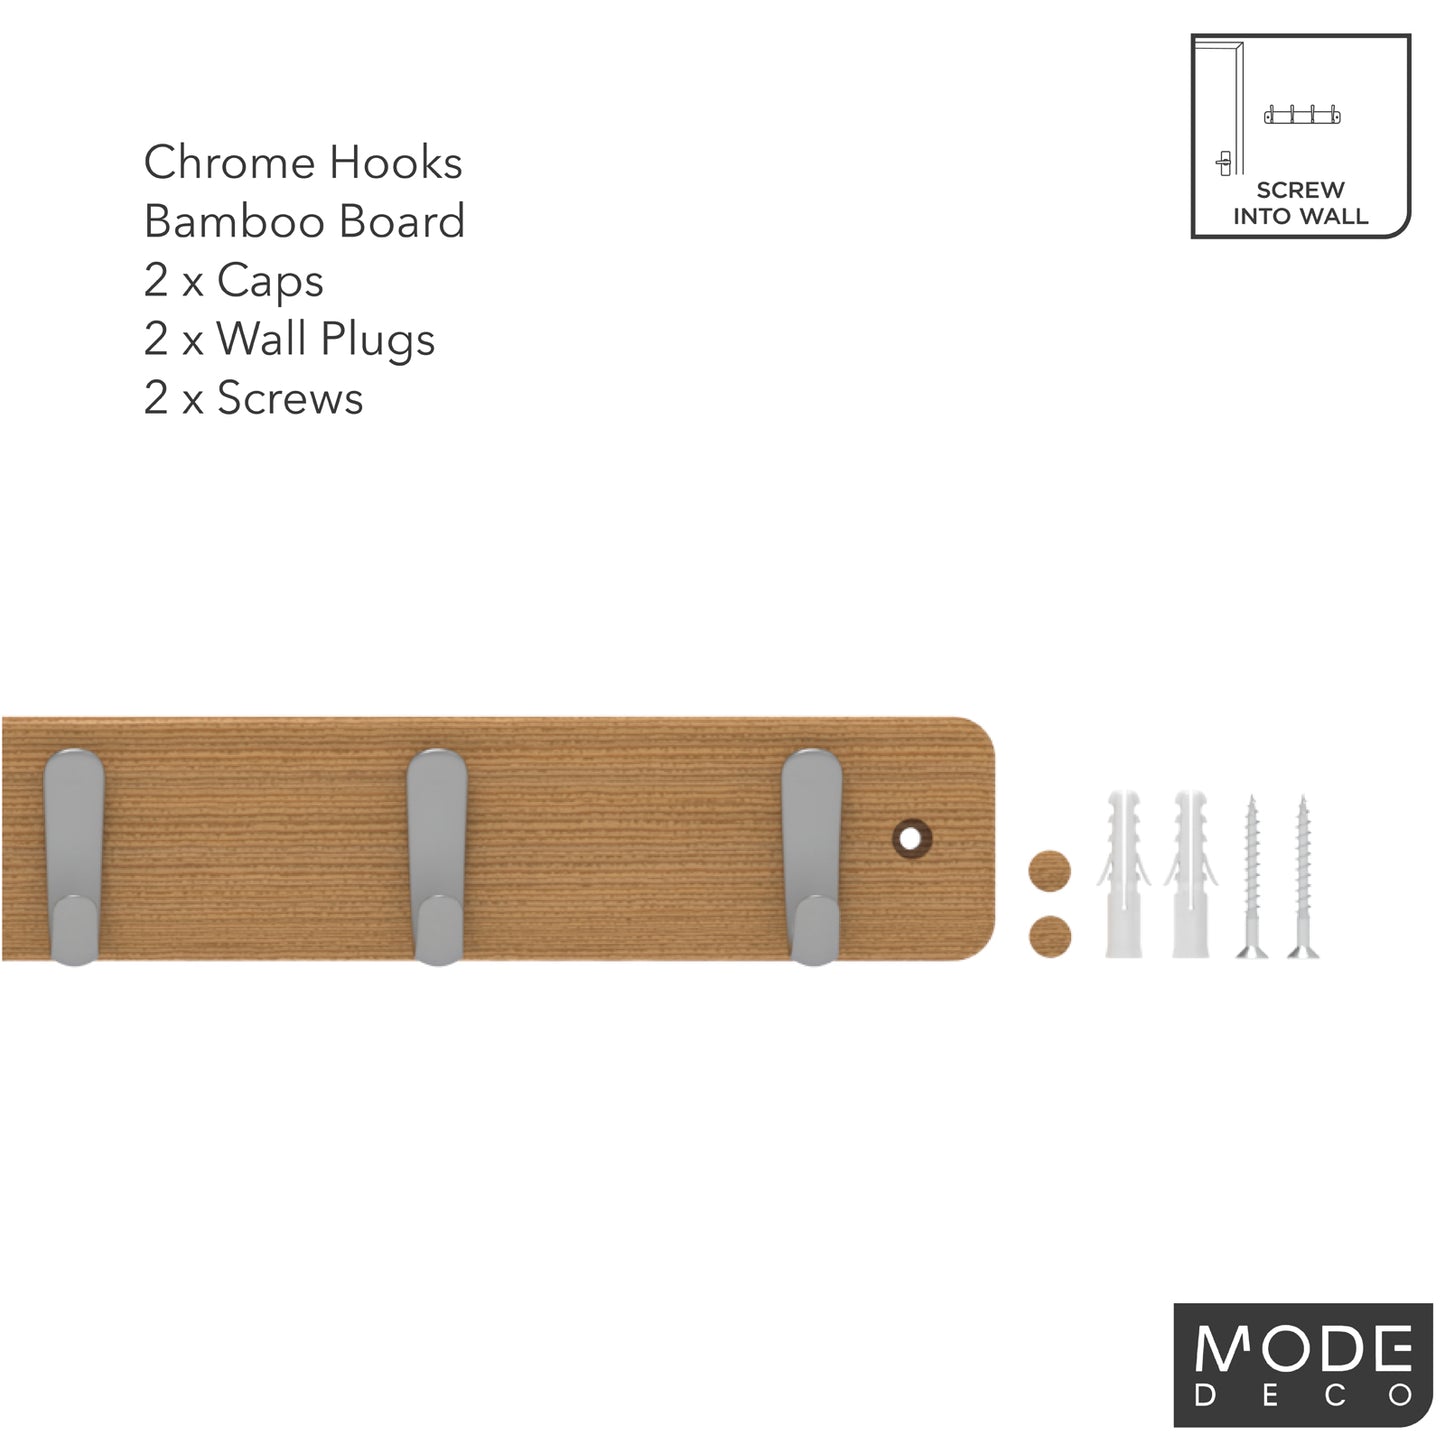 7 Chrome Hooks on Bamboo Board Hook Rack